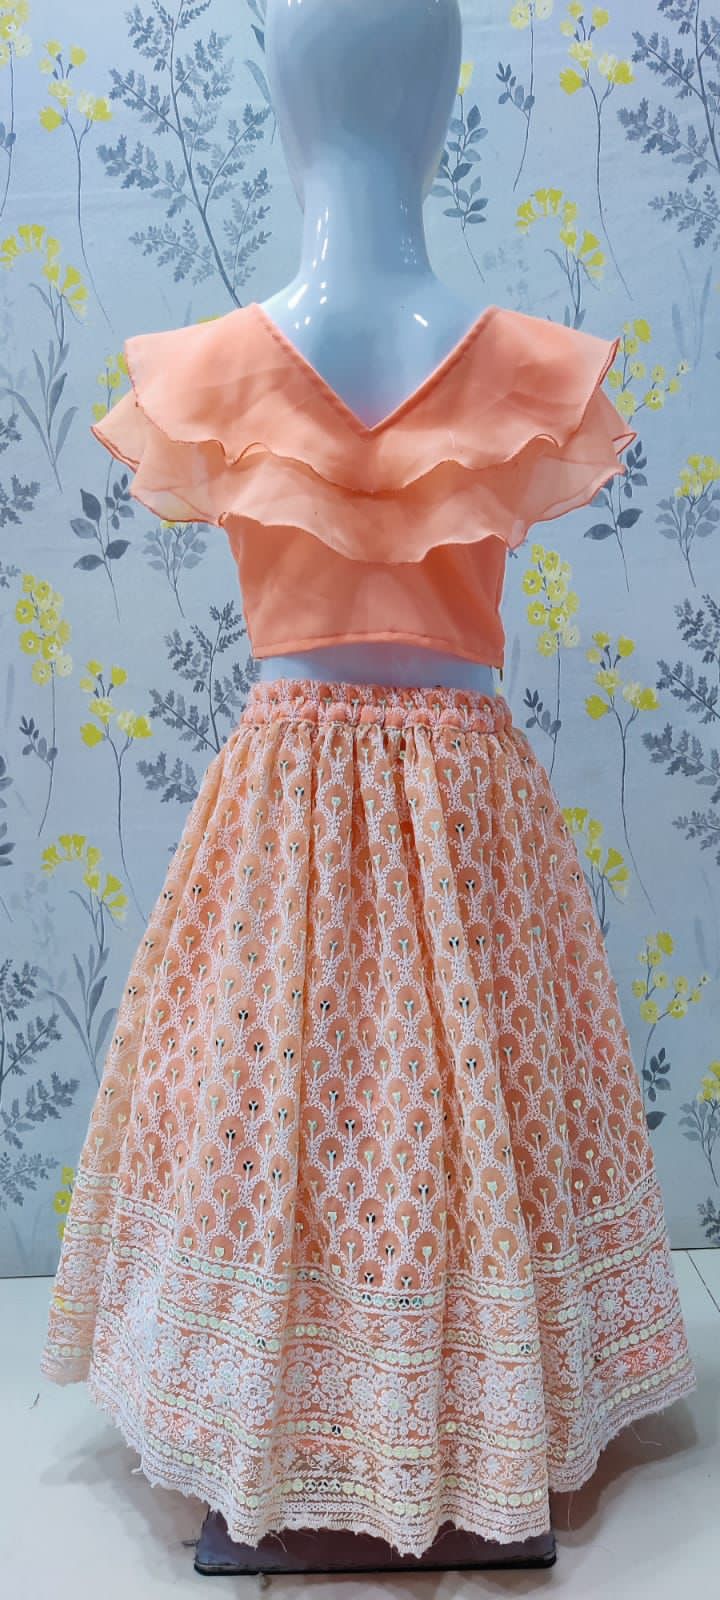 Kids: Stylish crop top and skirt